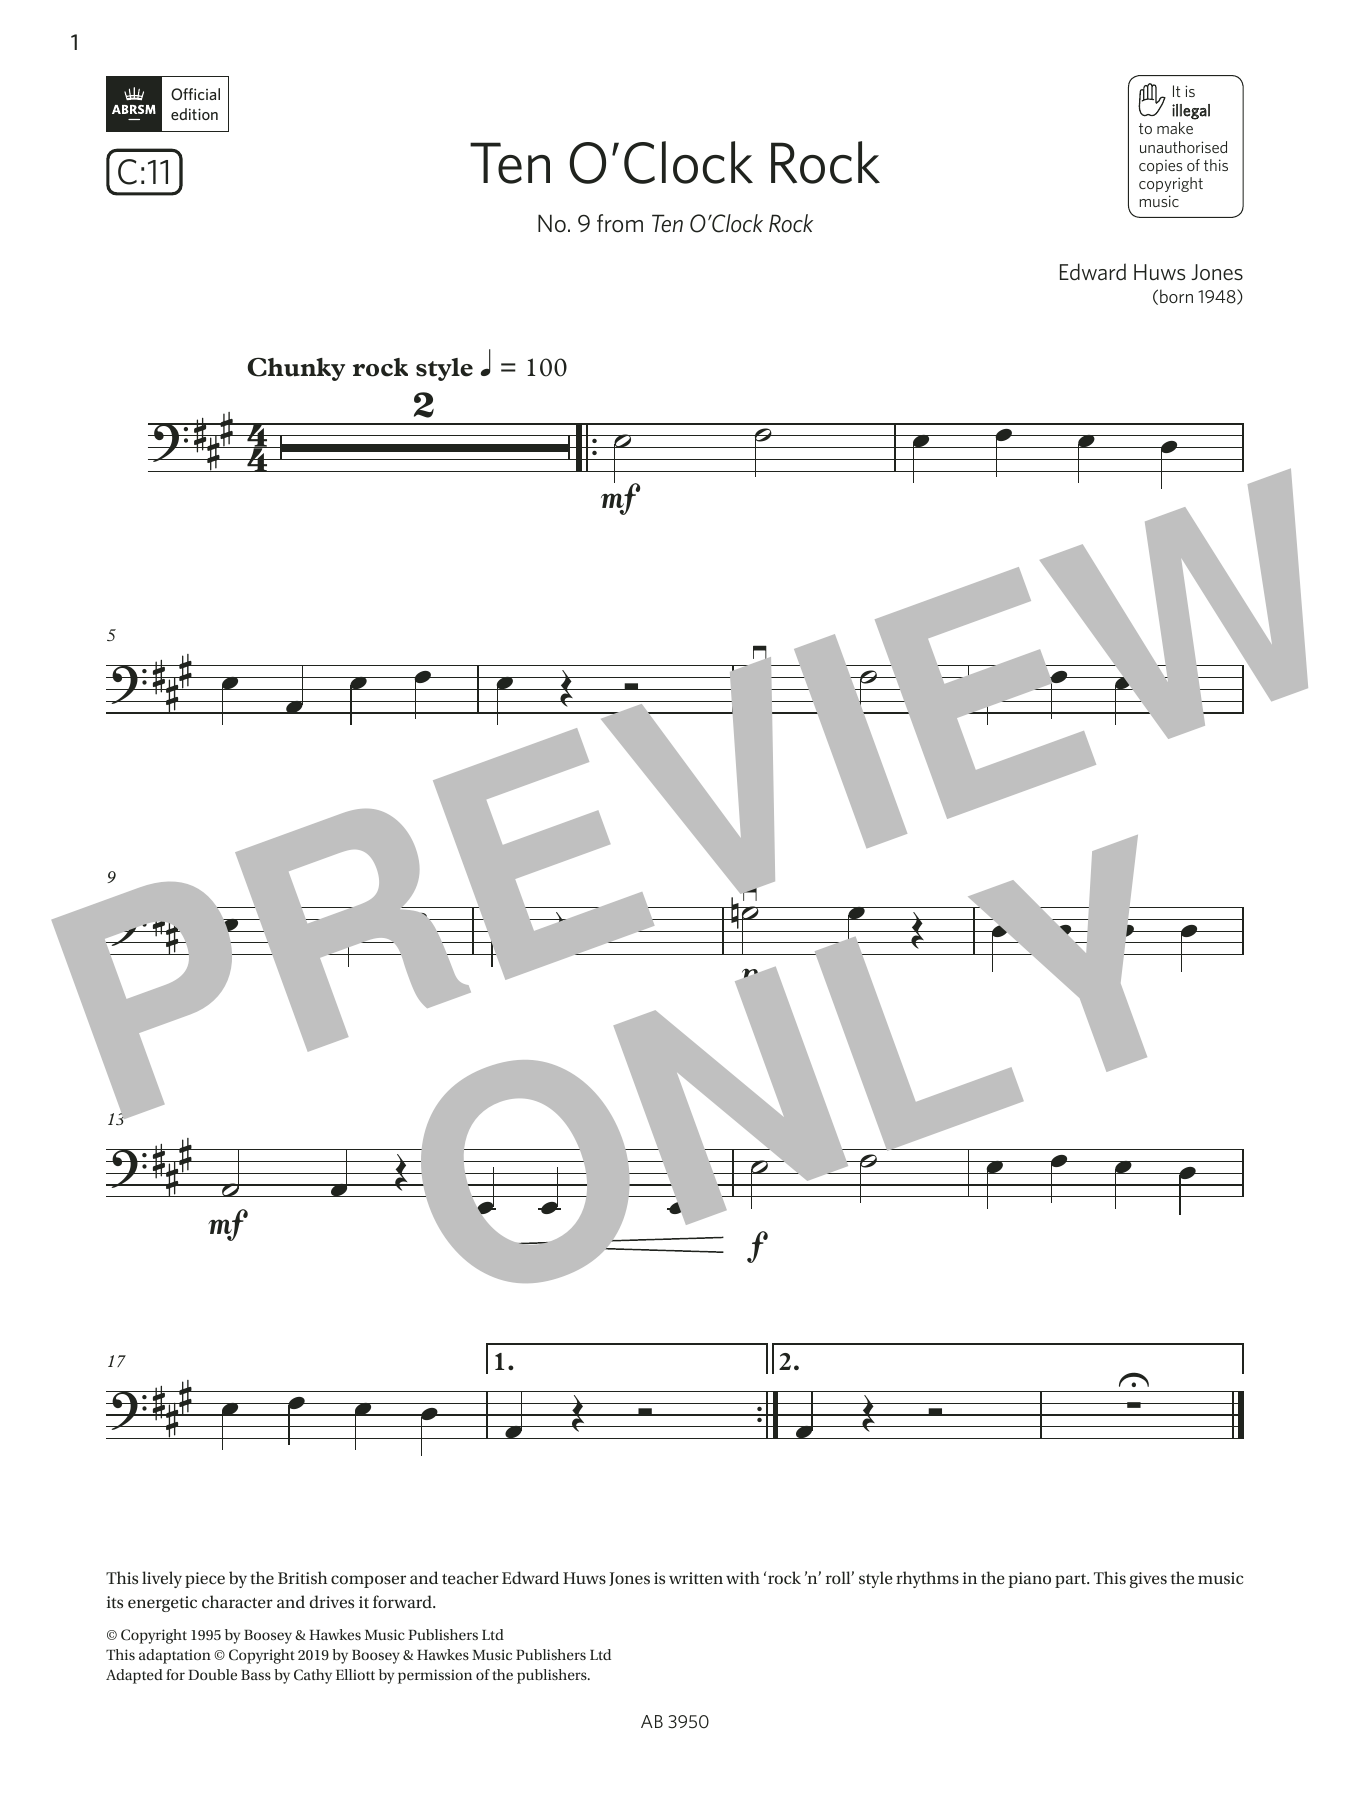 Download Edward Huws Jones 10 O'Clock Rock (Grade Initial, C11, fr Sheet Music